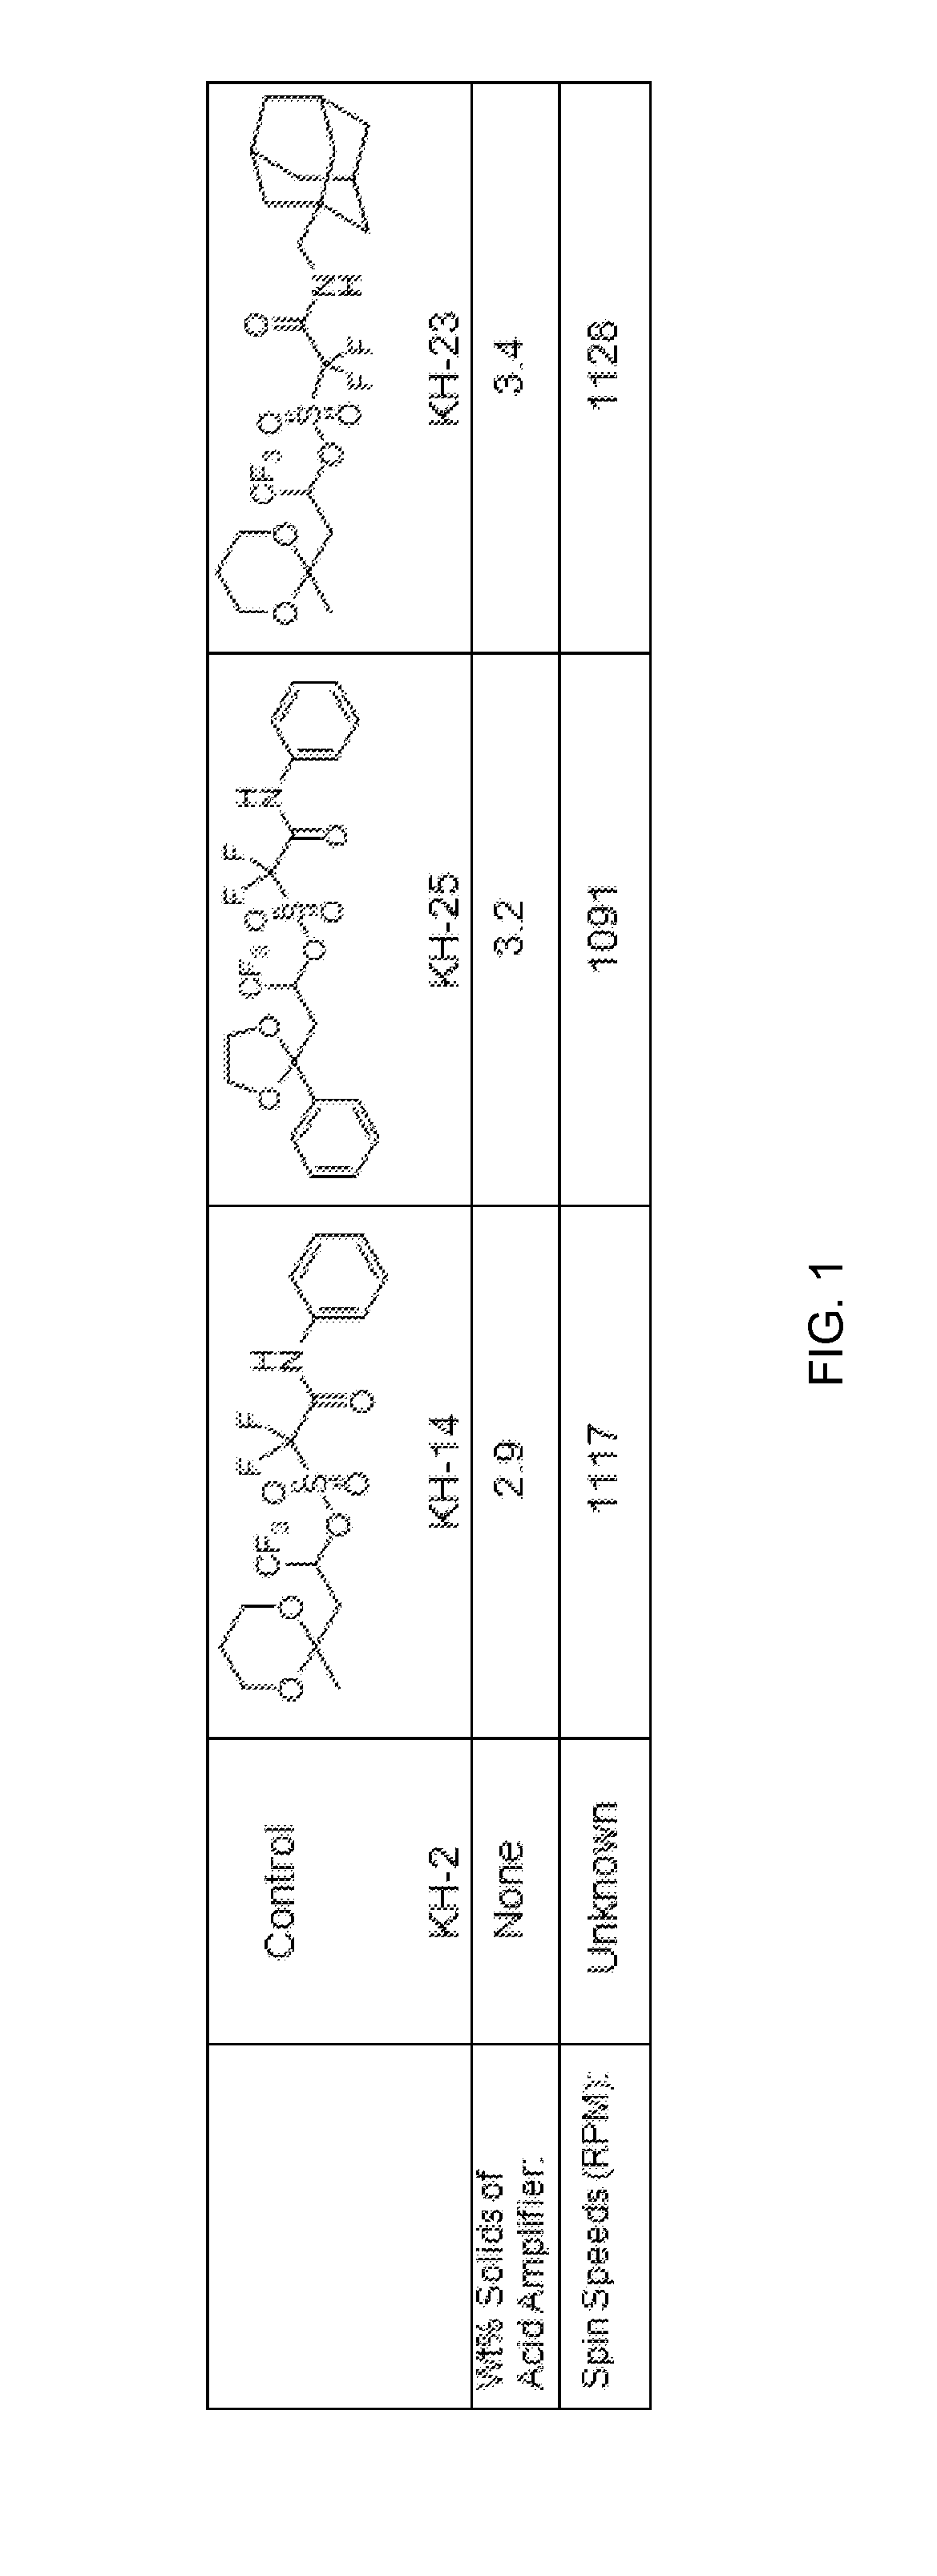 Stabilized acid amplifiers